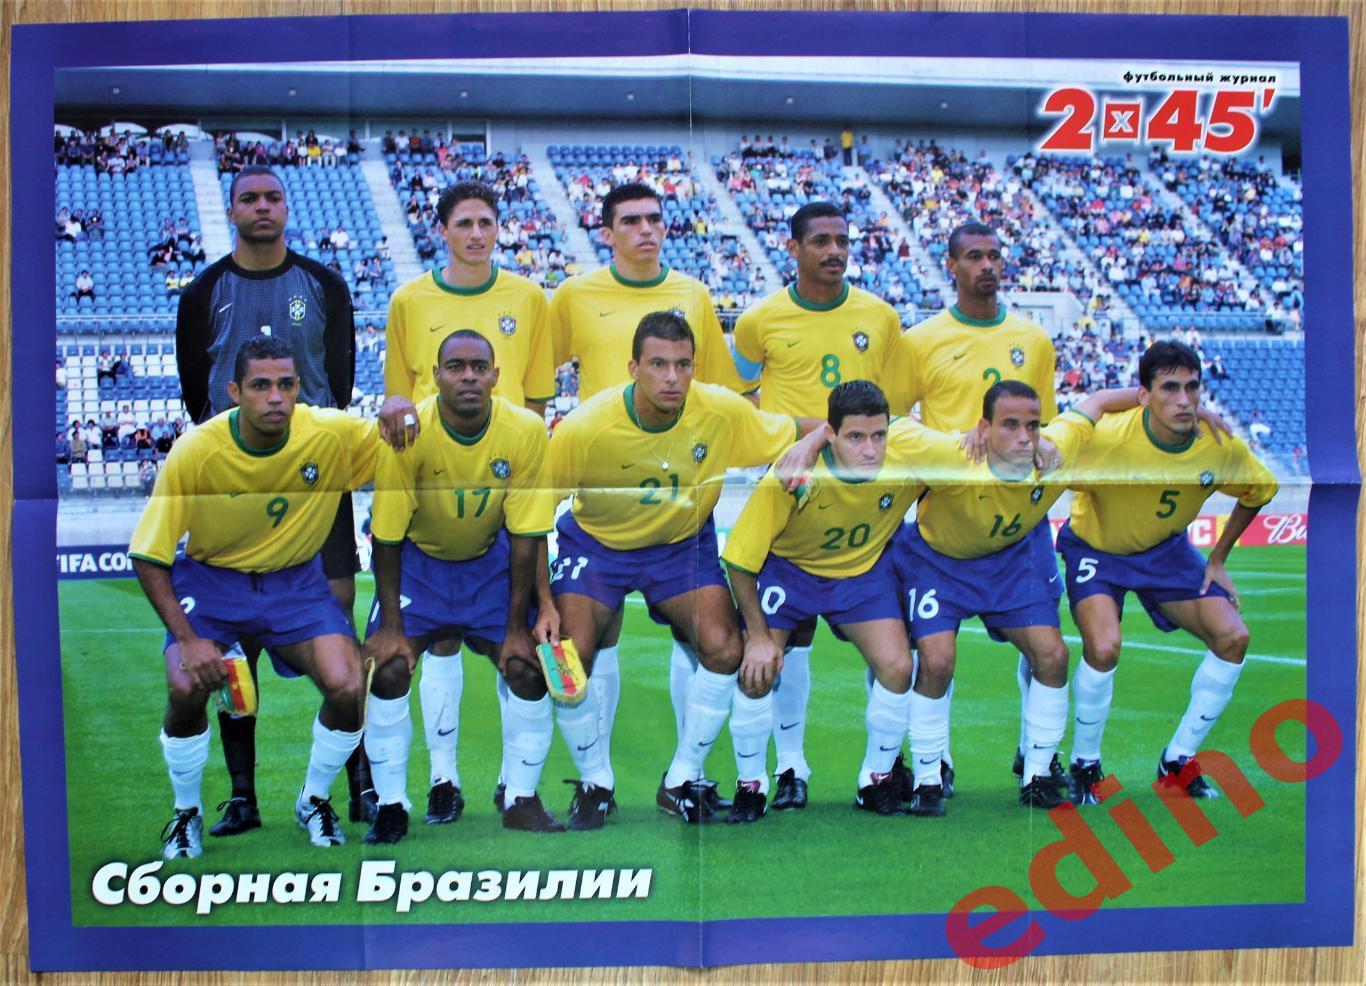 журнал Футбол 2 х 45 Бразилия